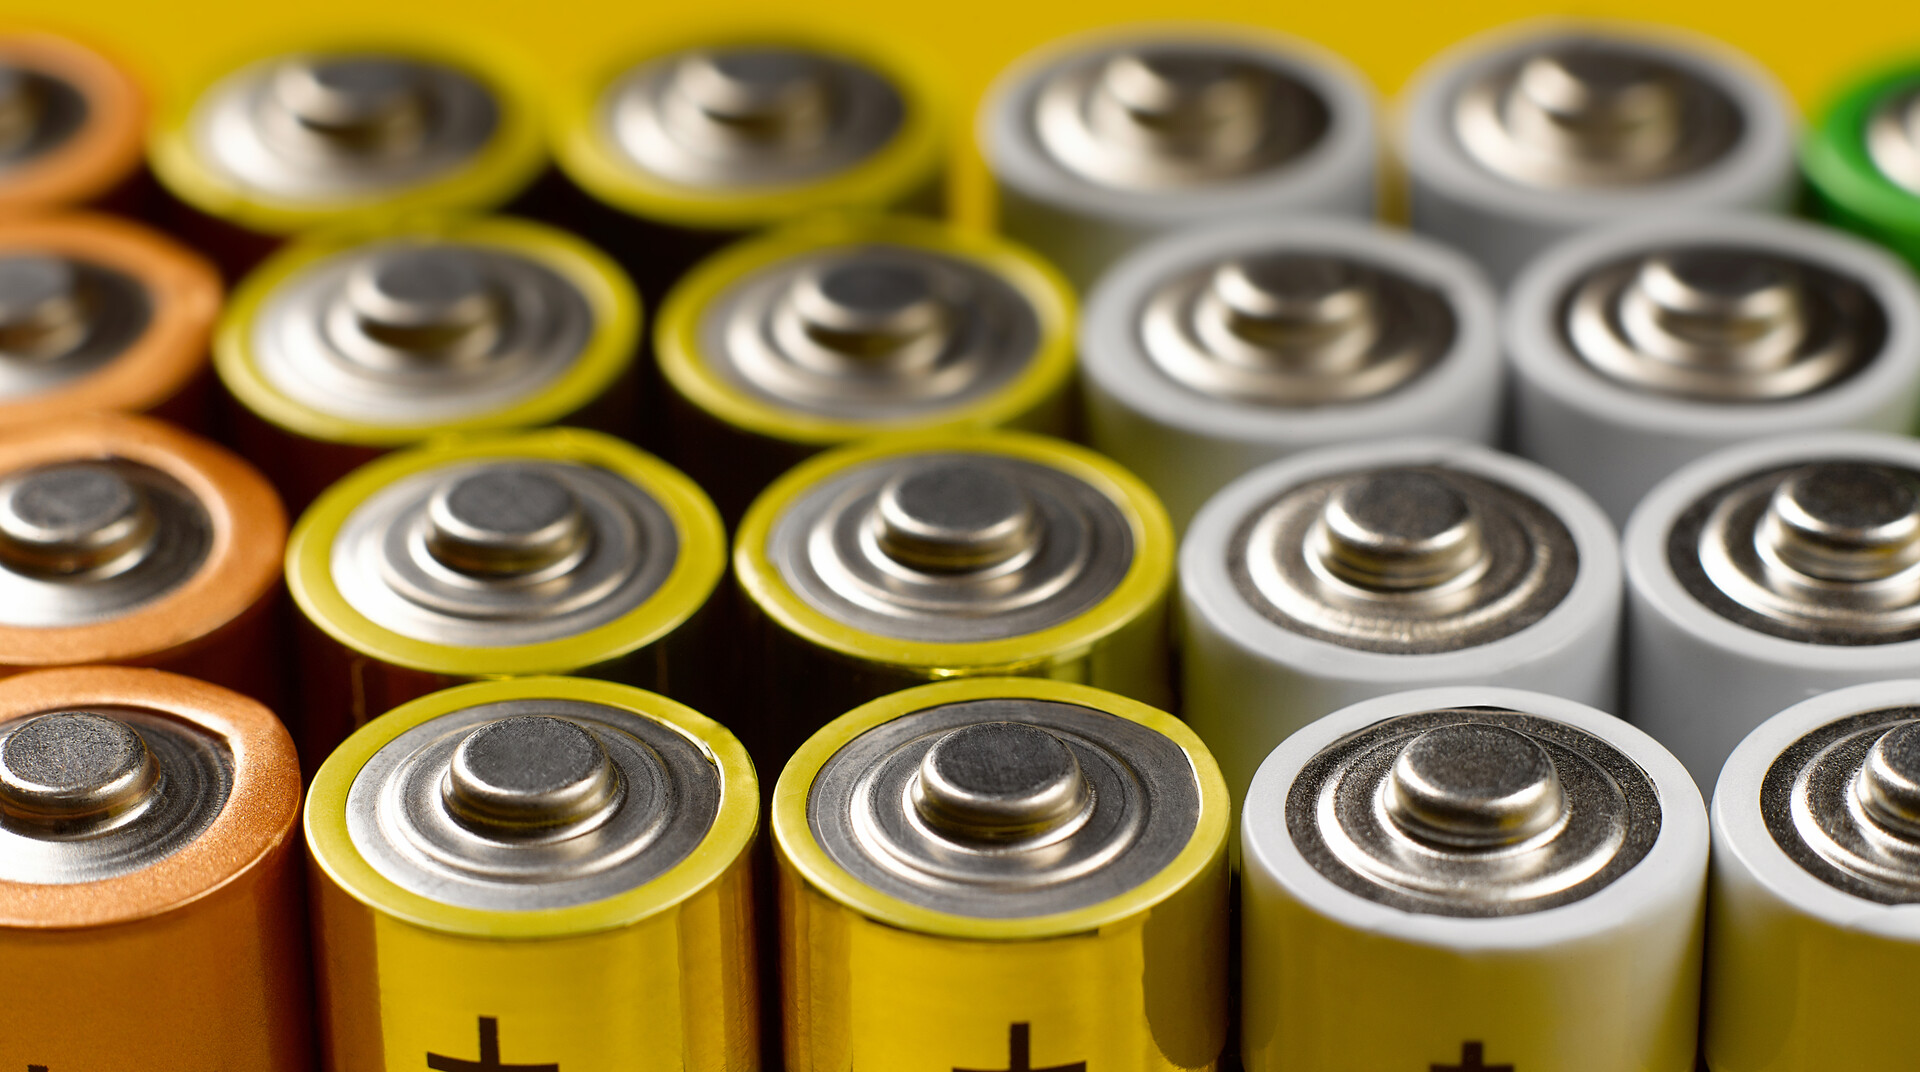 <p class="MsoNoSpacing">Aluminum-Ion Batteries Charge Faster, Last Longer</p>
